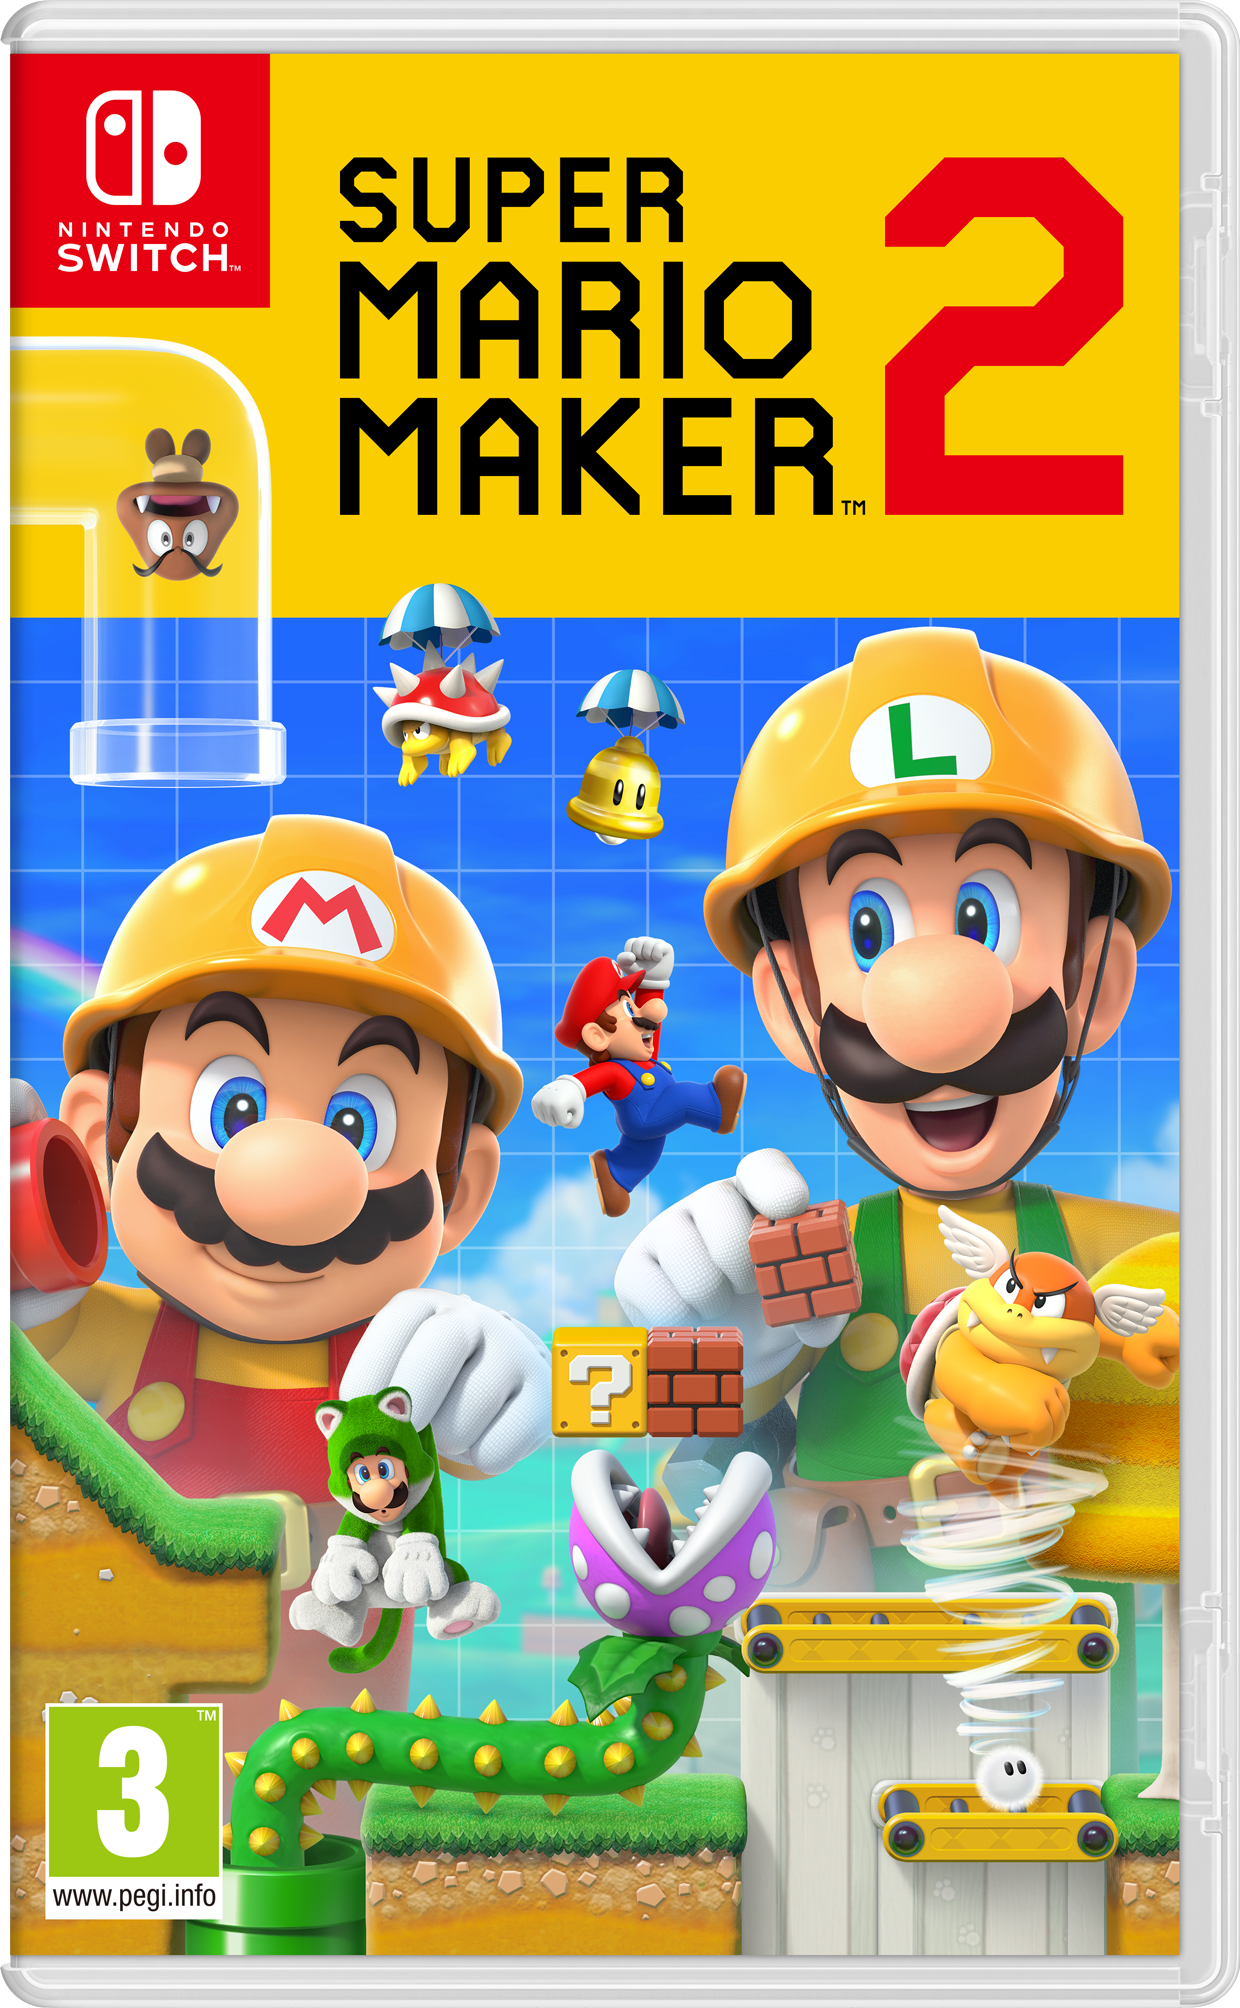 Super Mario Maker 2 (UK, SE, DK, FI)